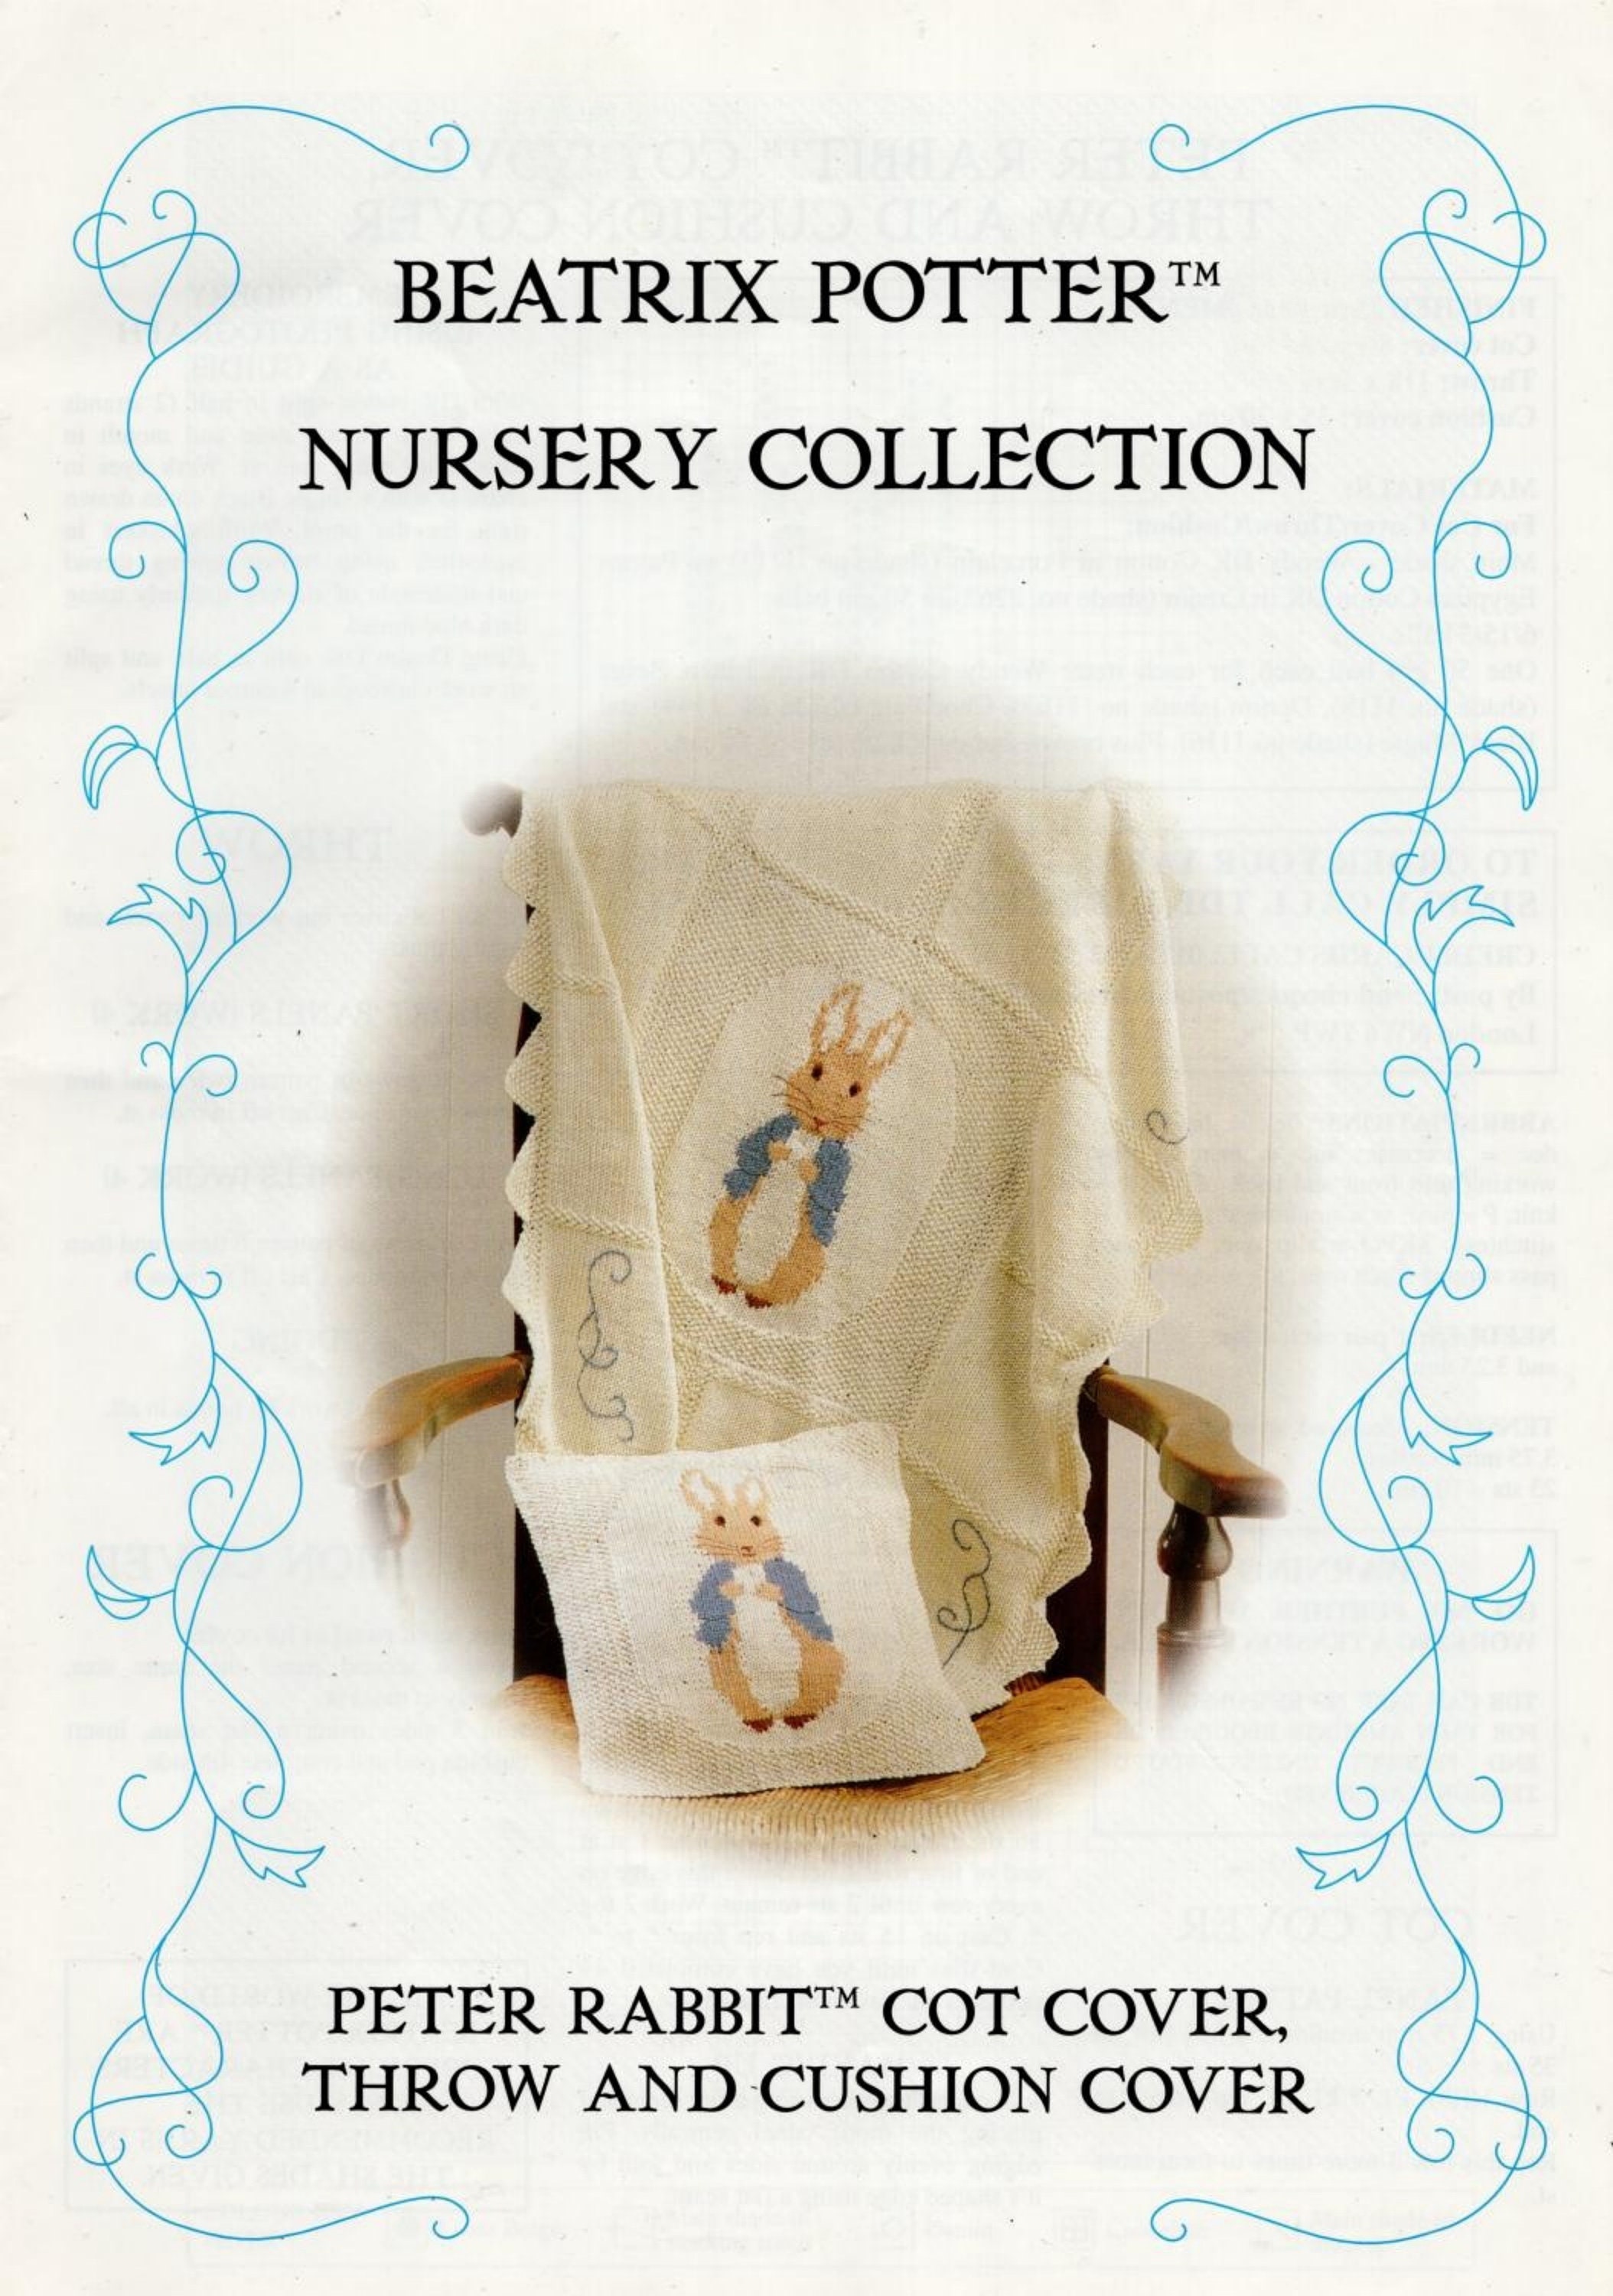 45 Beatrix Potter Nursery Inspiration ideas  beatrix potter nursery,  beatrix potter, nursery inspiration